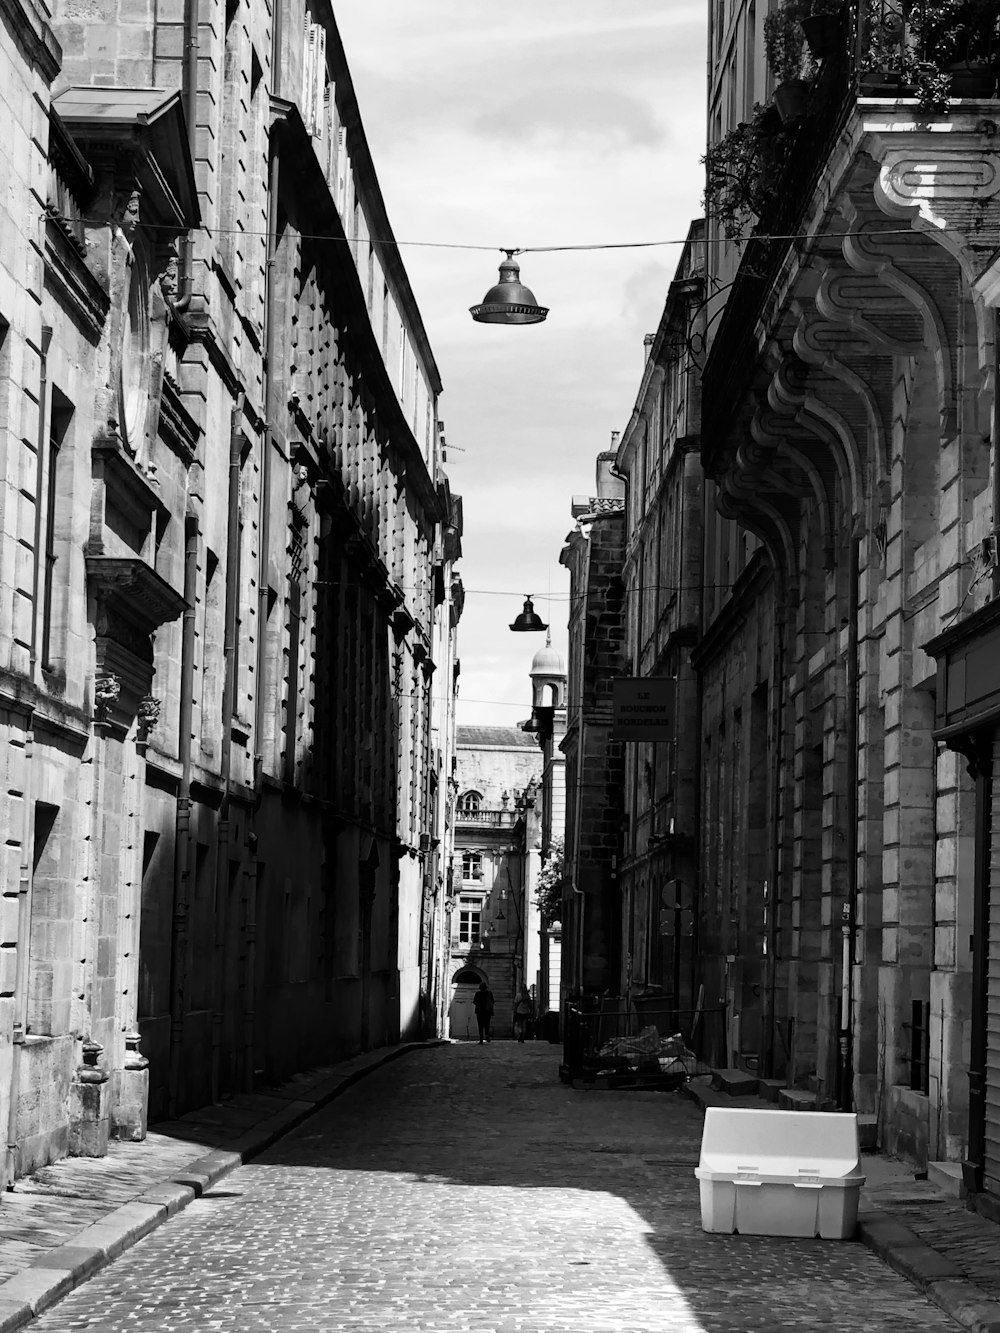 grayscale photo of street lamp between buildings